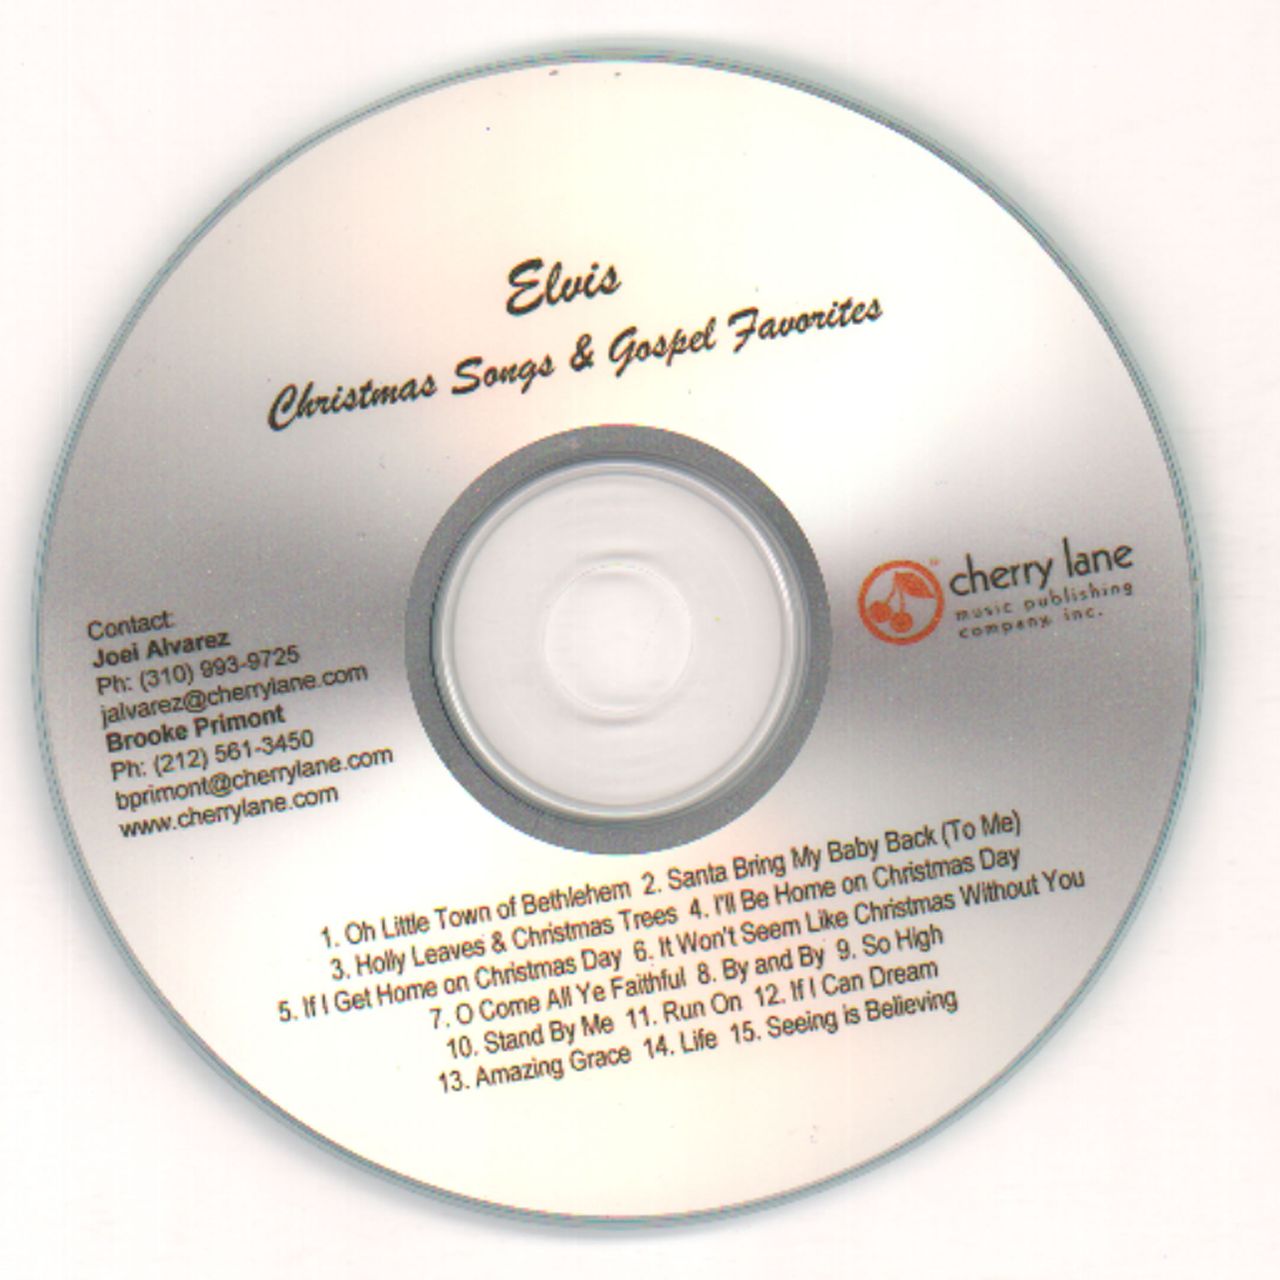 Elvis Presley Christmas Songs And Gospel Favorites US Promo CD album (CDLP)